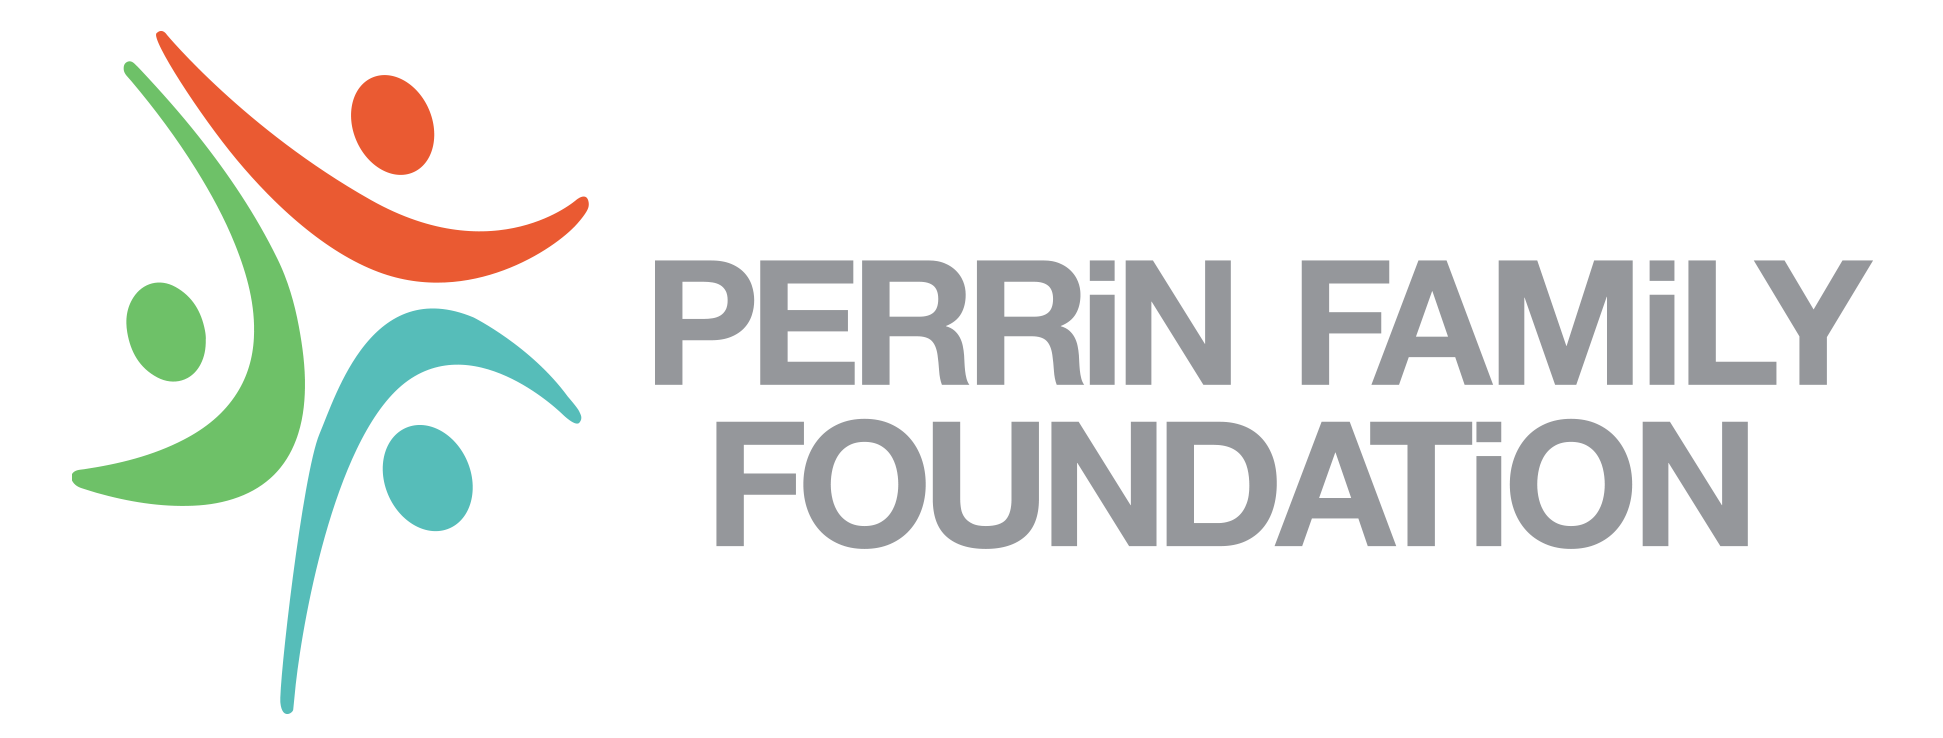 Perrin Family Foundation